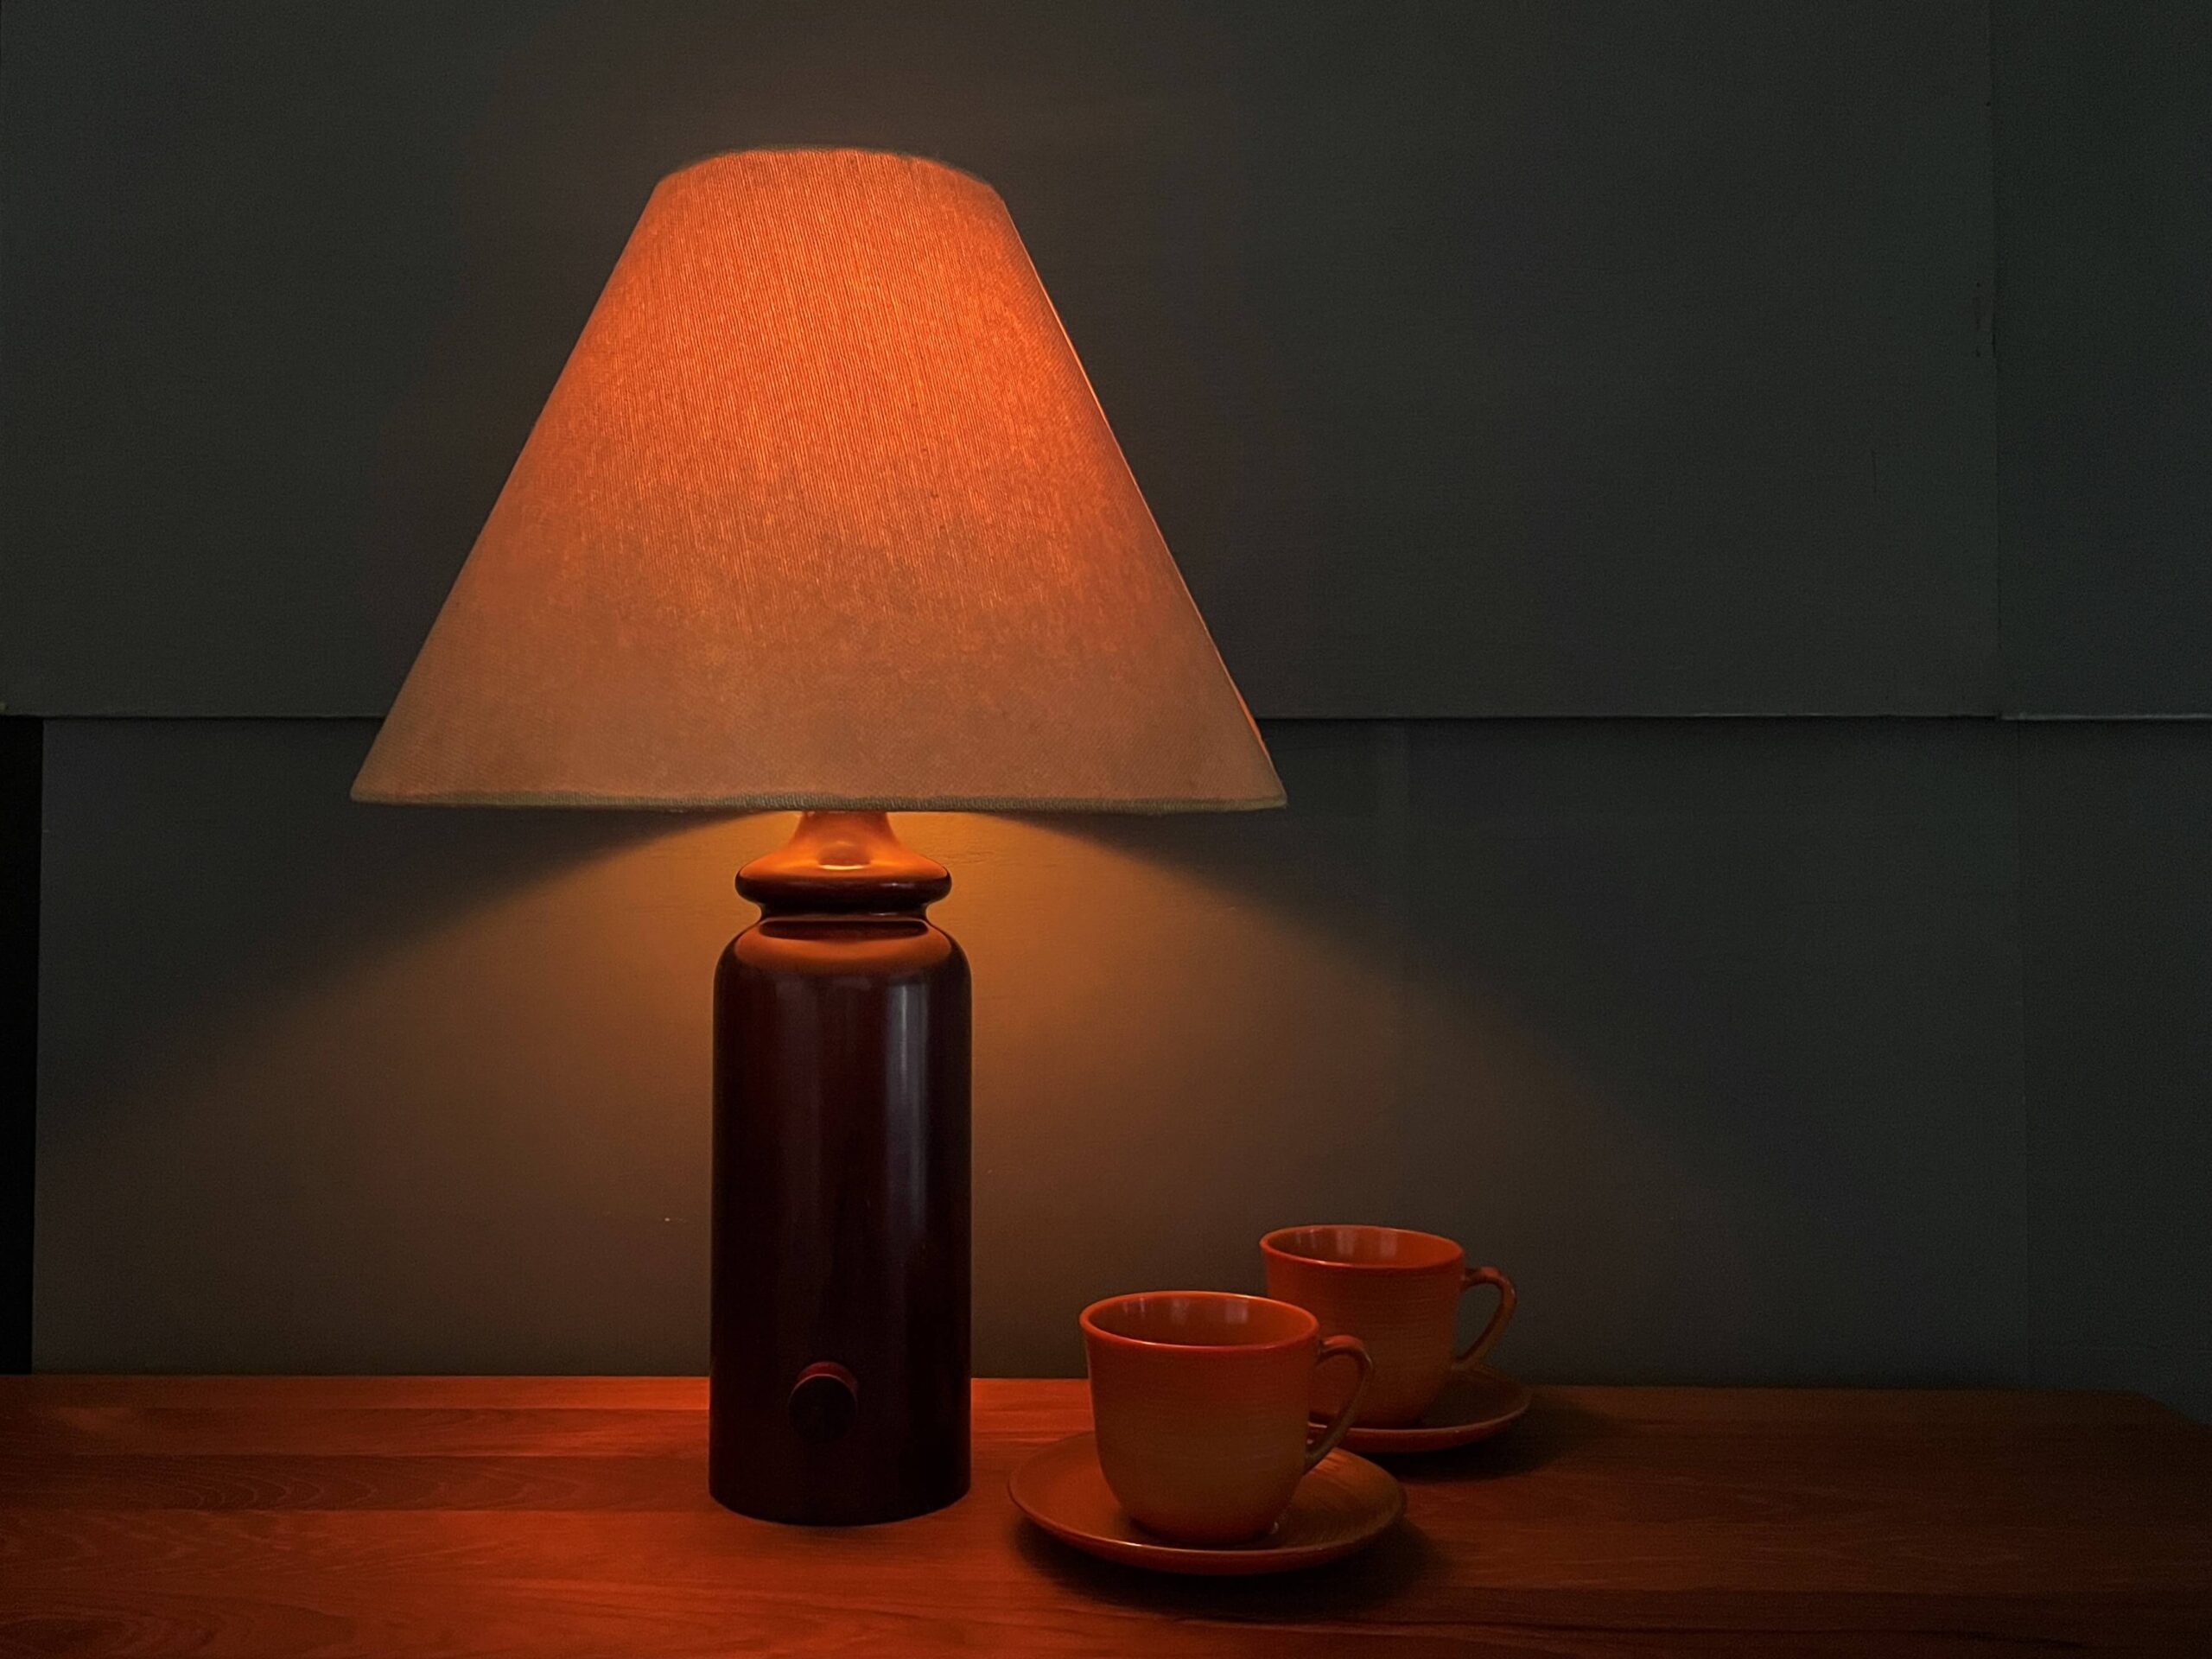 KI-no キーノ Kn table Lamp Orange - ライト